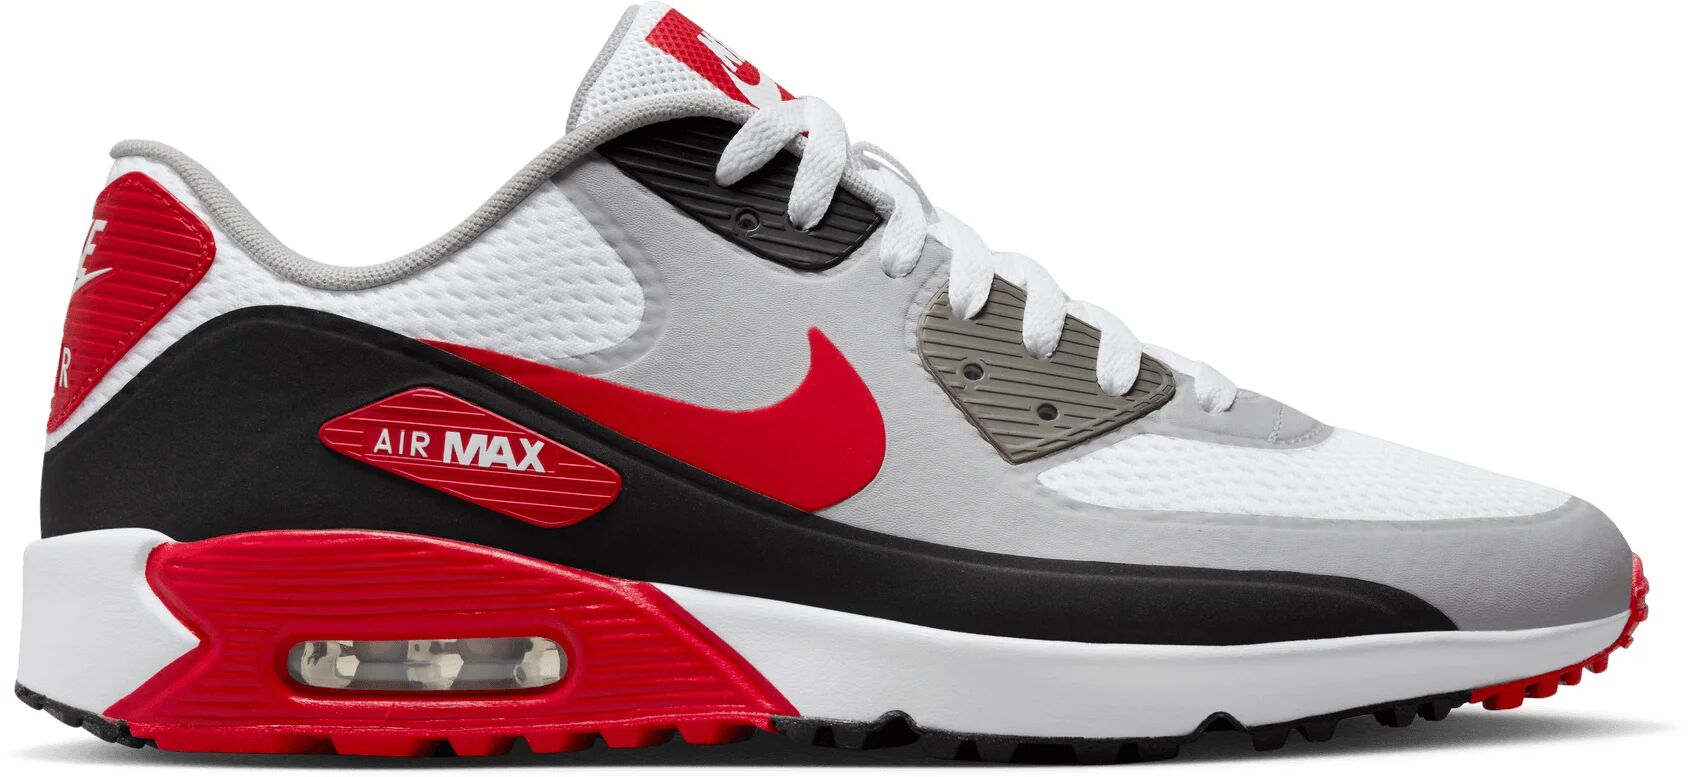 Nike Air Max 90 G Golf Shoes - White/Black/Photon Dust/University Red - 5 - MEDIUM